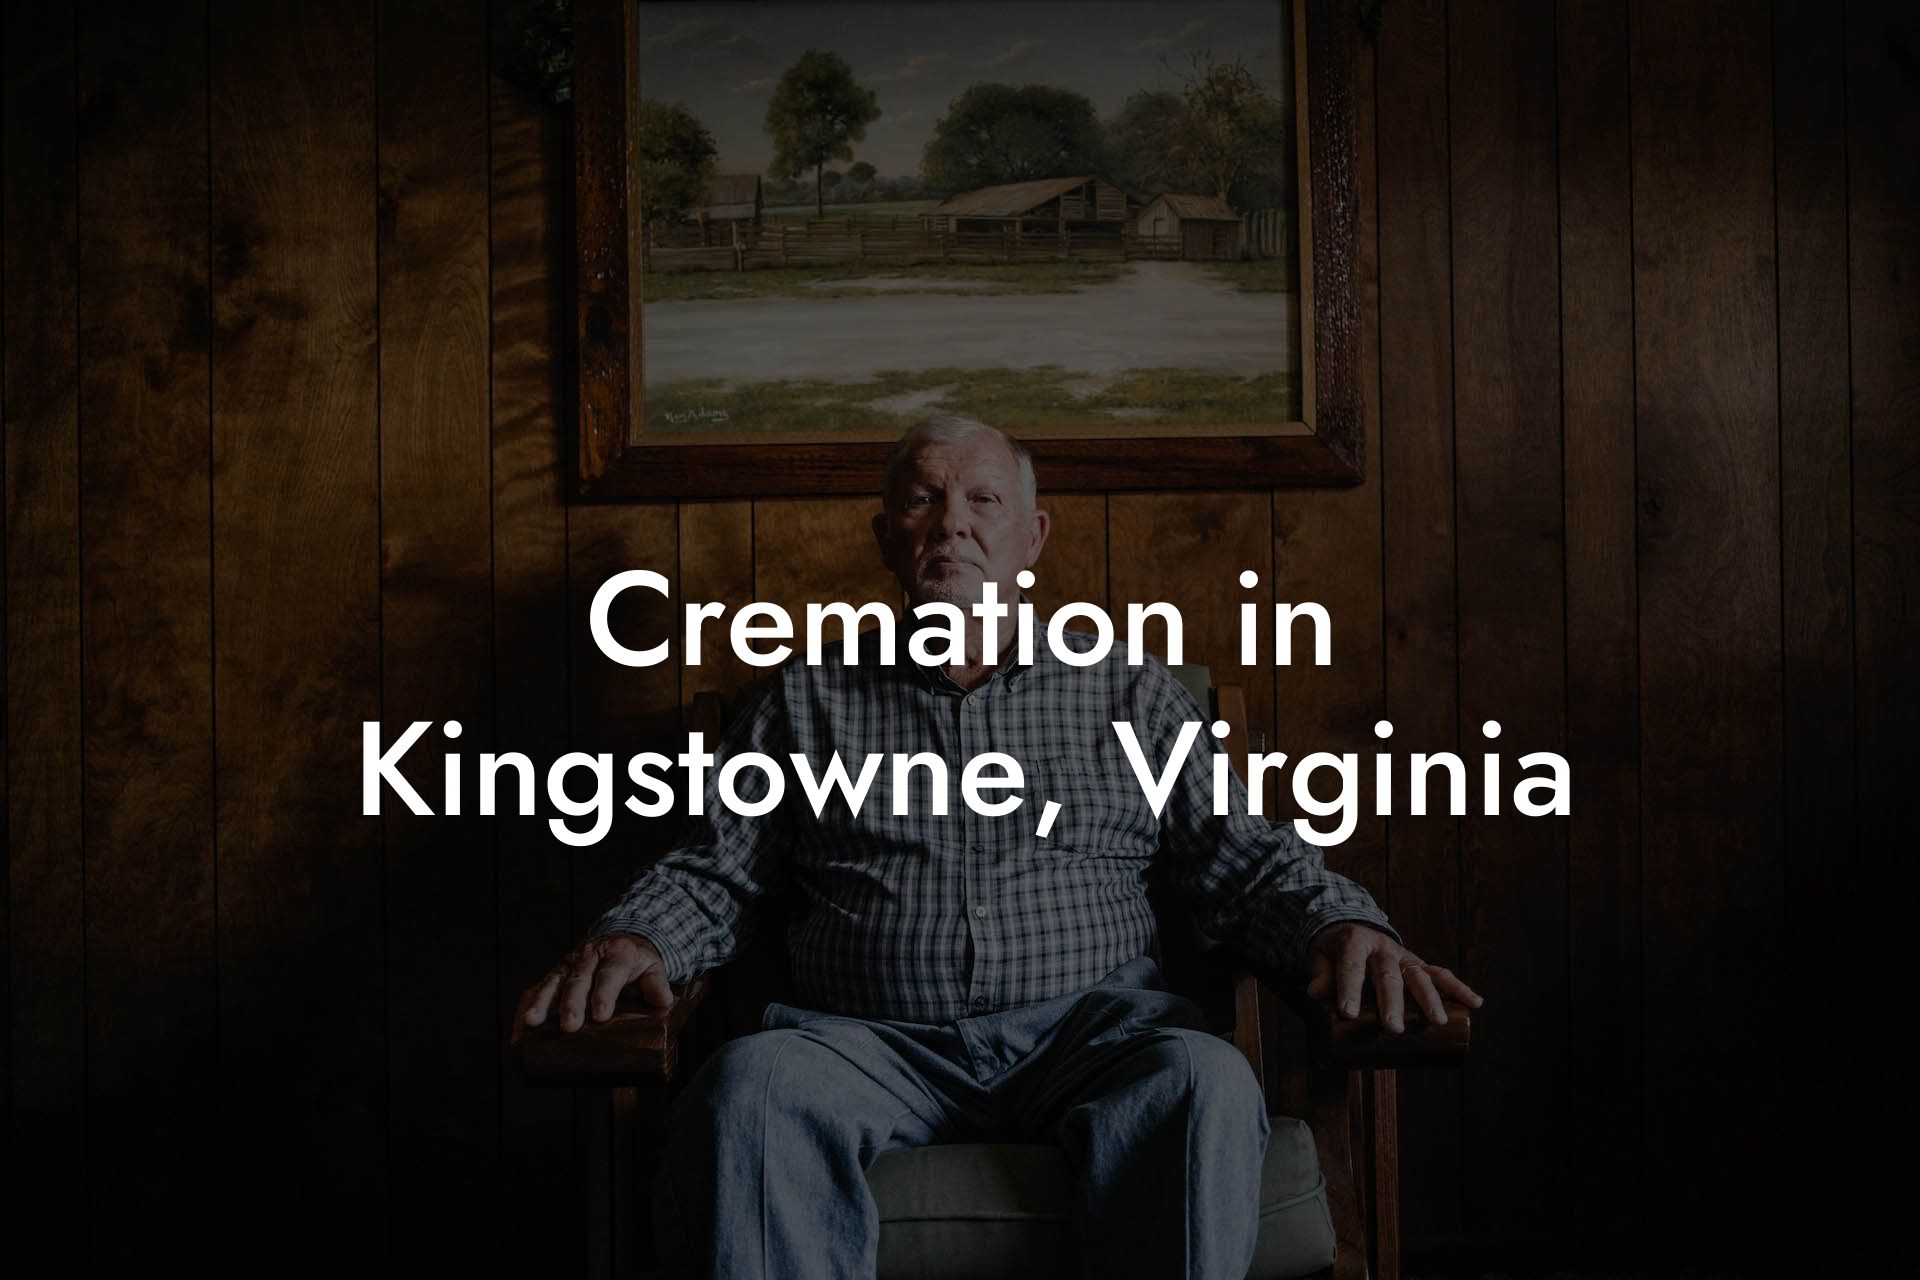 Cremation in Kingstowne, Virginia